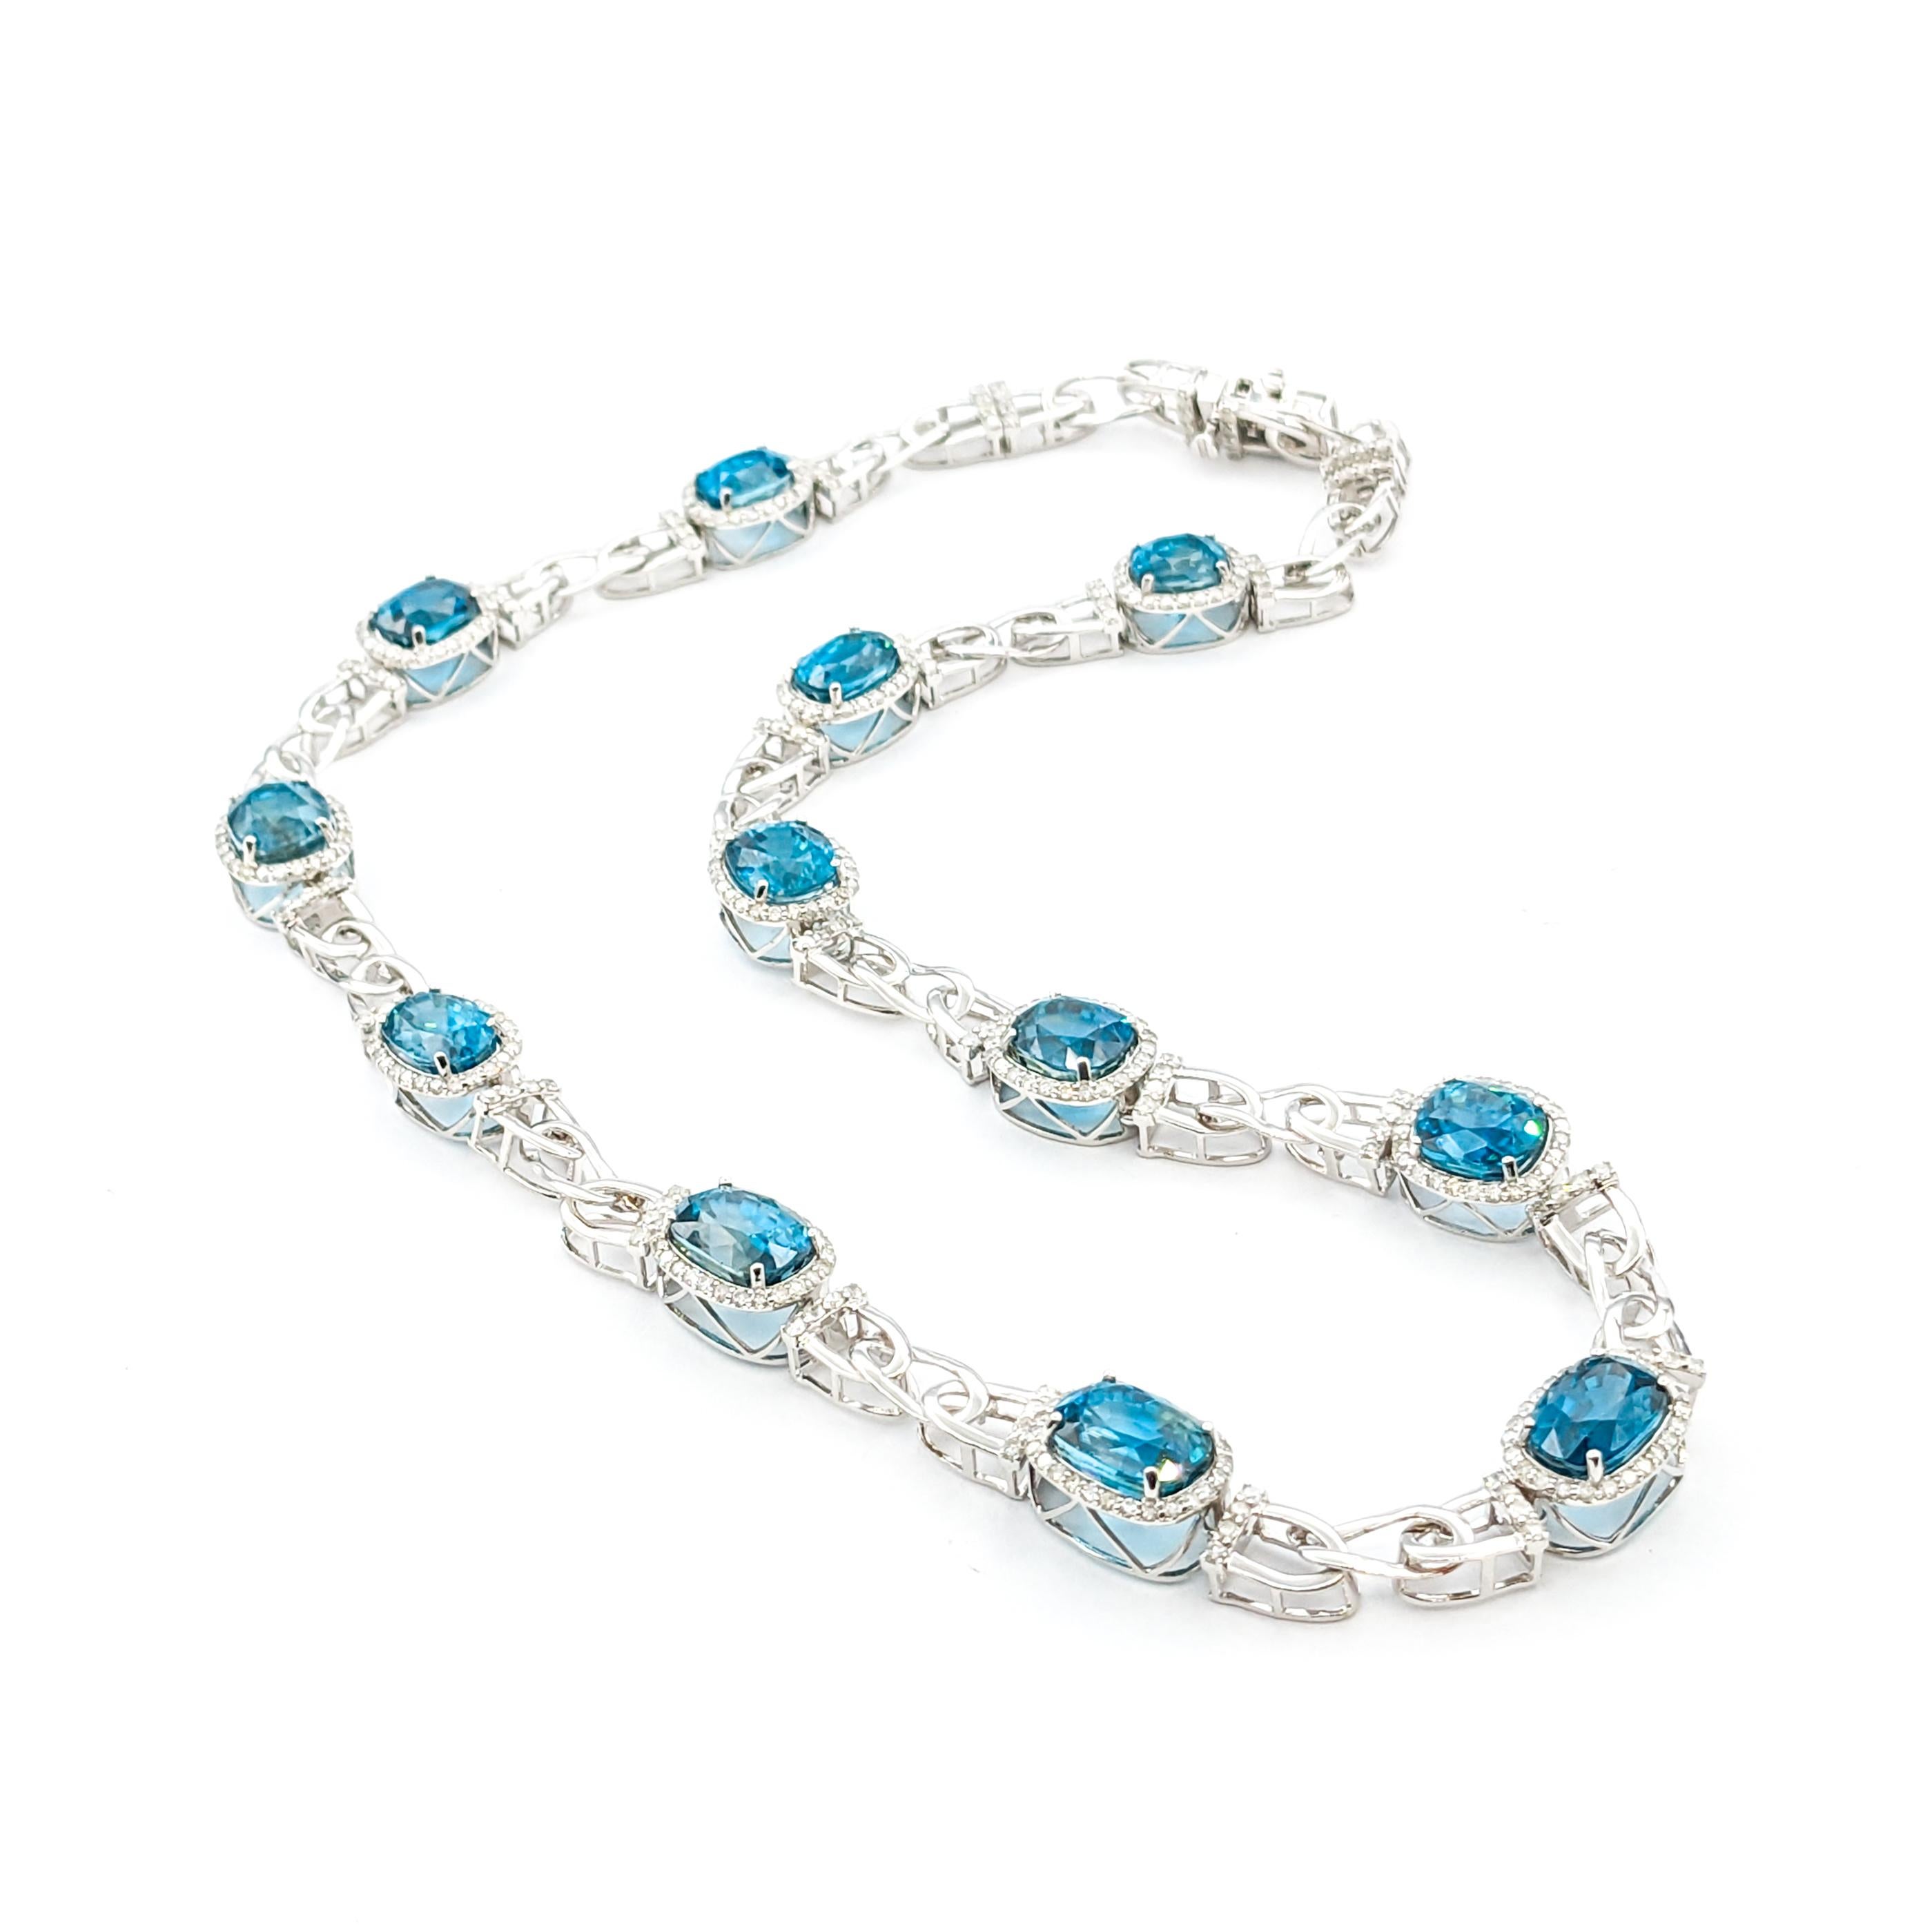 60.81ctw Blue Zircon & 4.53ctw Diamonds Necklace In White Gold For Sale 1